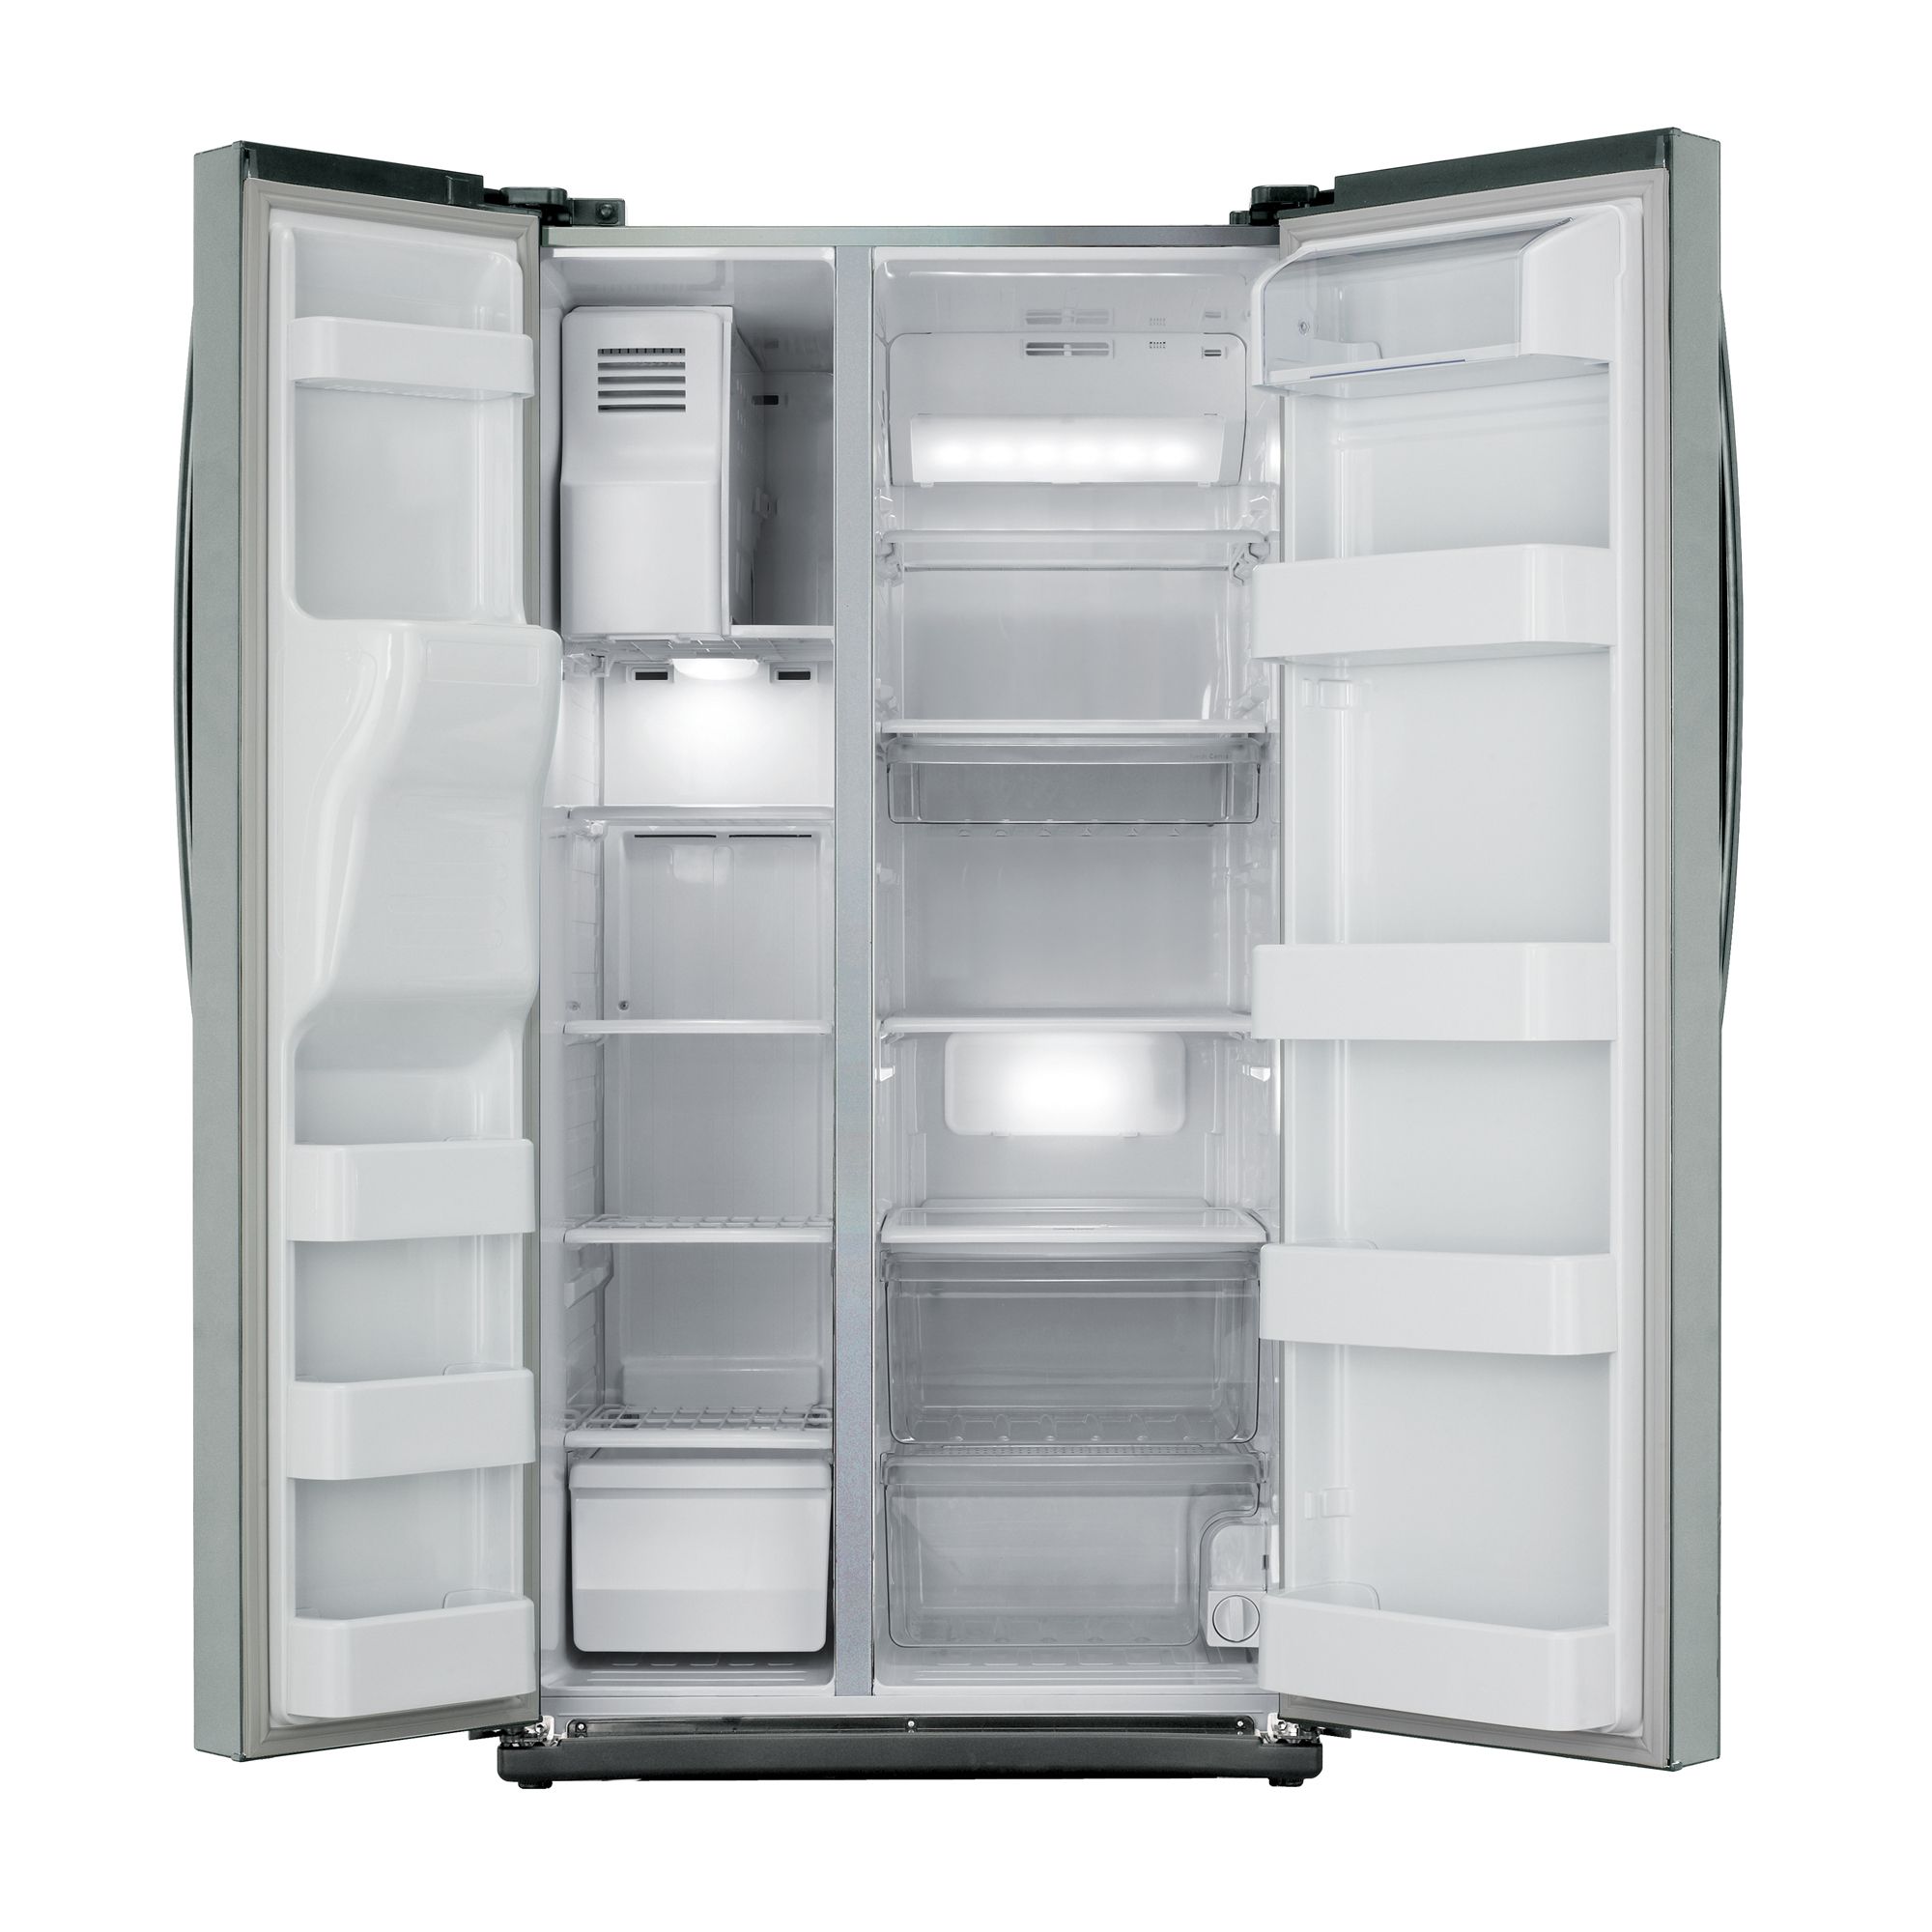 Samsung Refrigerator Rs25h5111sr Manual